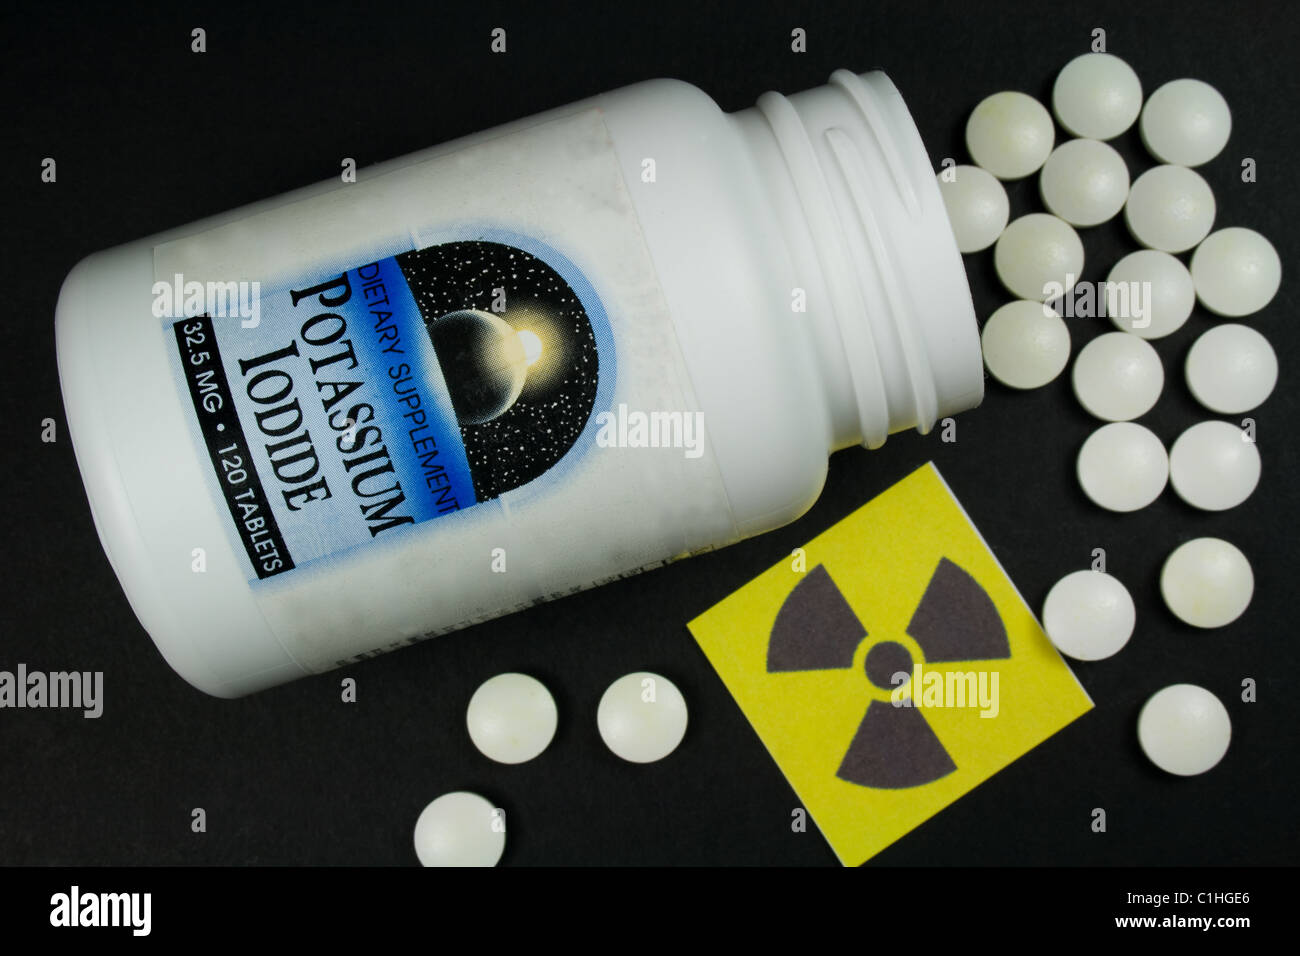 Potassium Iodide Pills - Treatment for Radiation Exposure (Iodine Tablets) Stock Photo